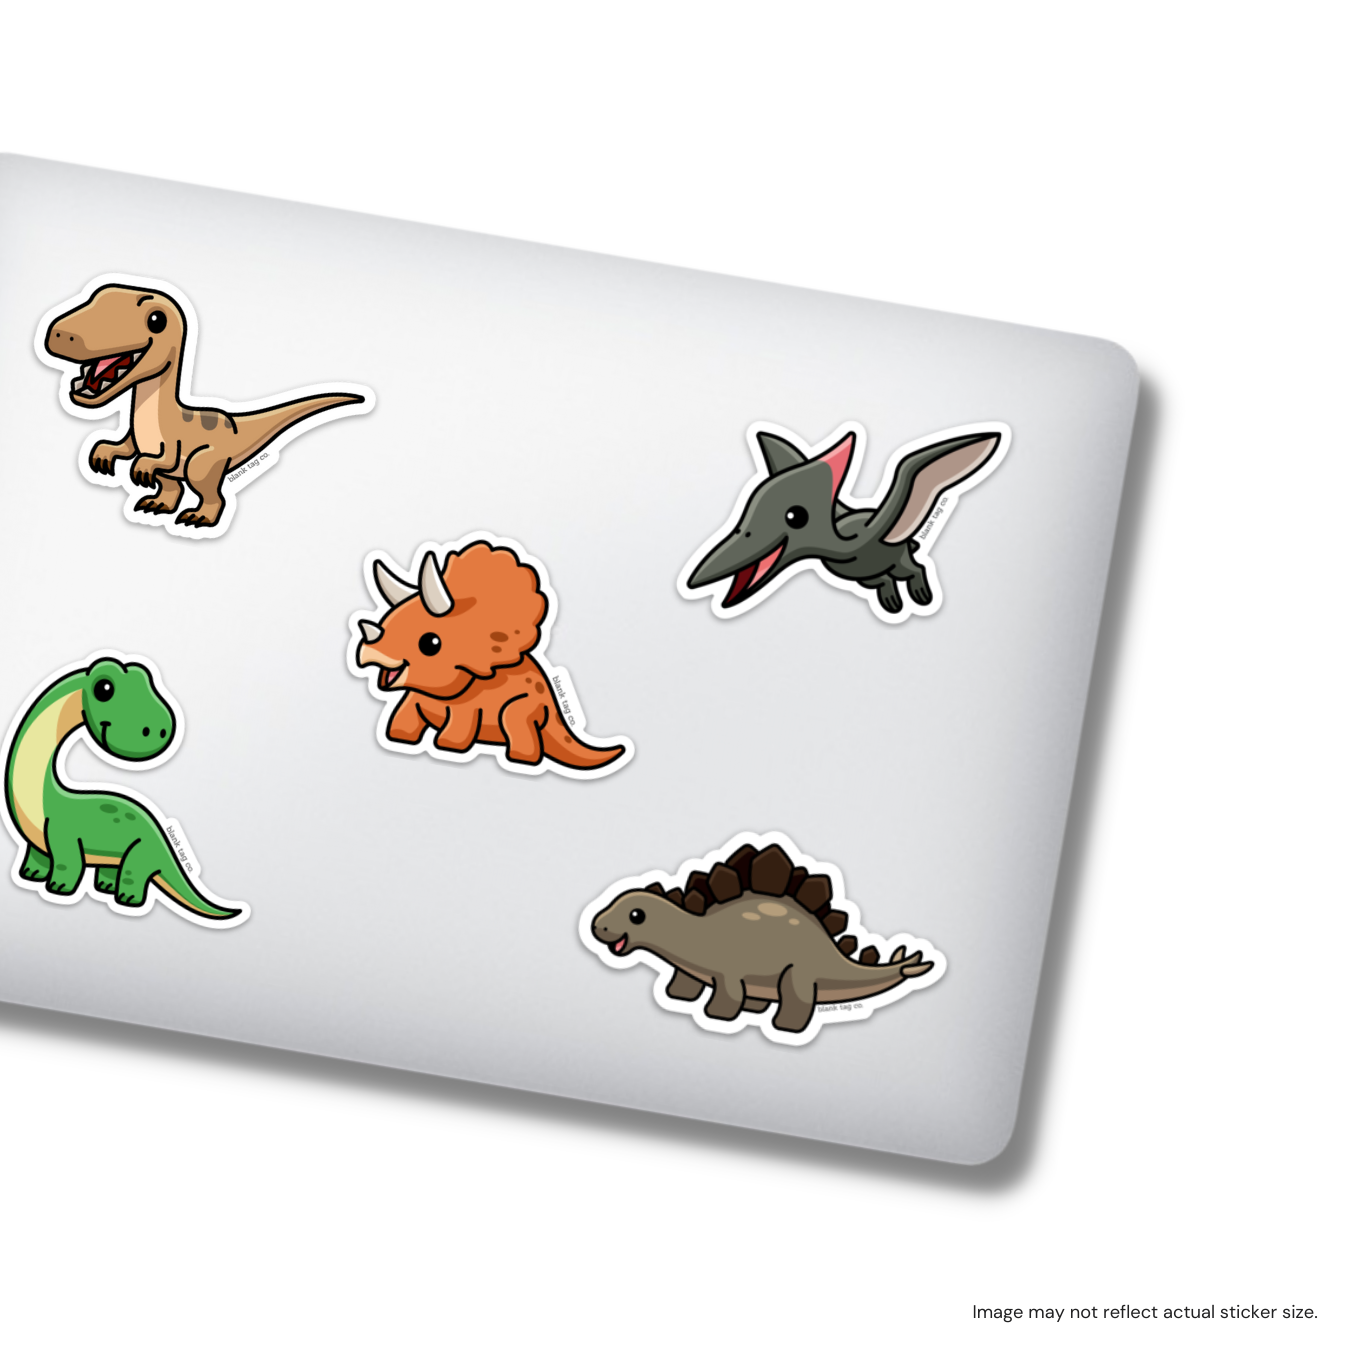 The Stegosaurus Sticker